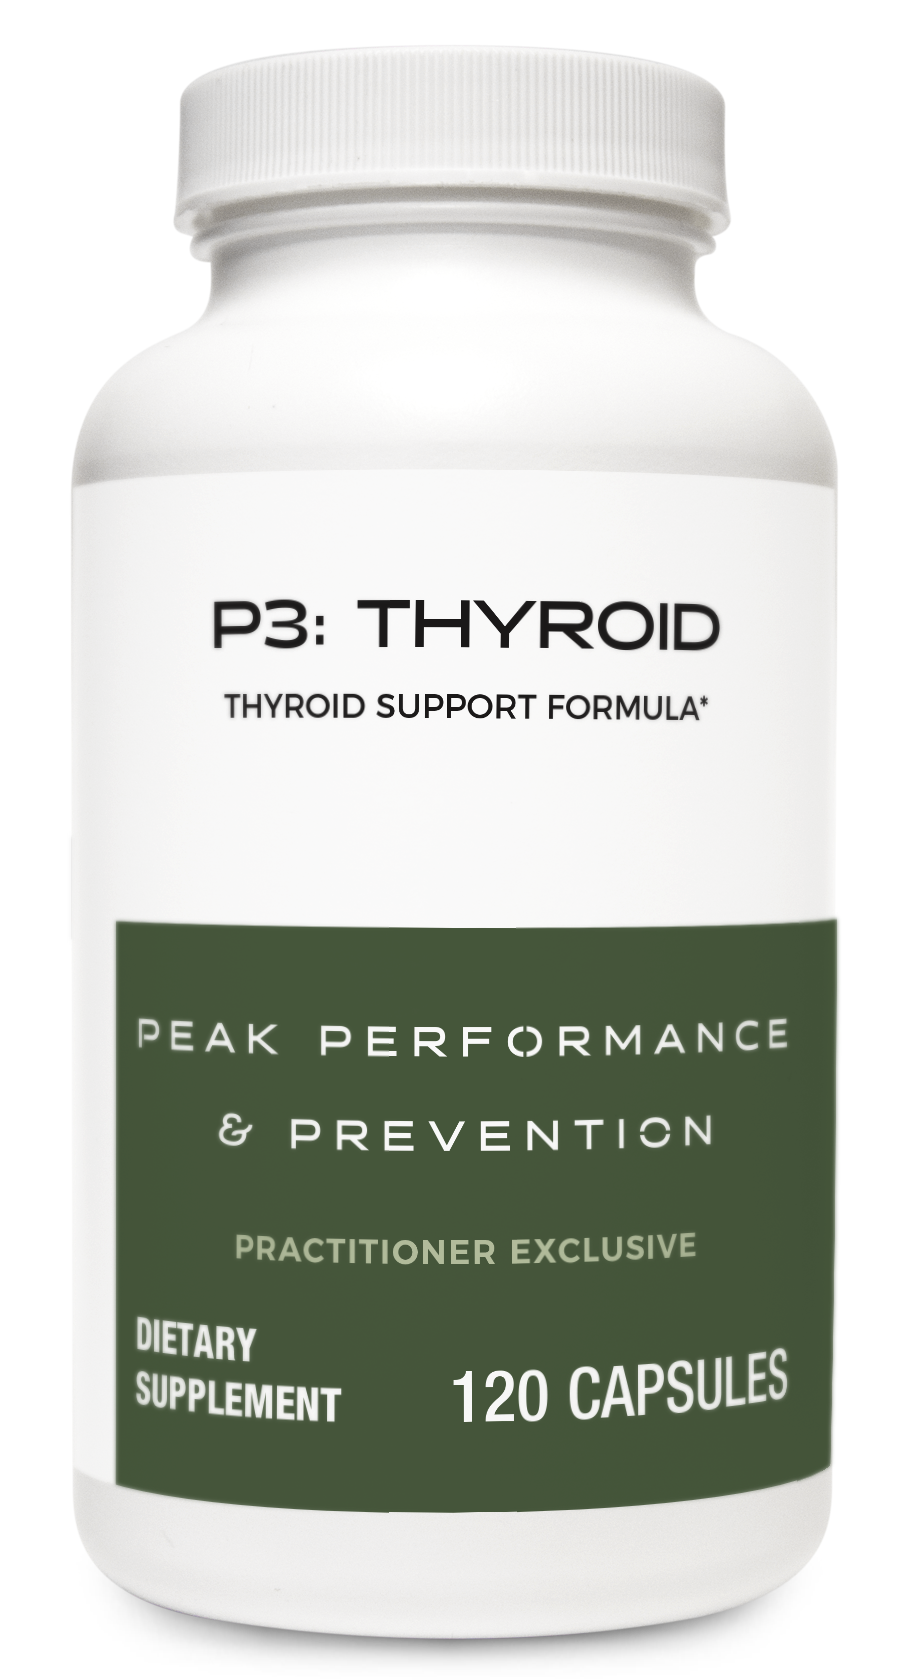 P3: Thyroid